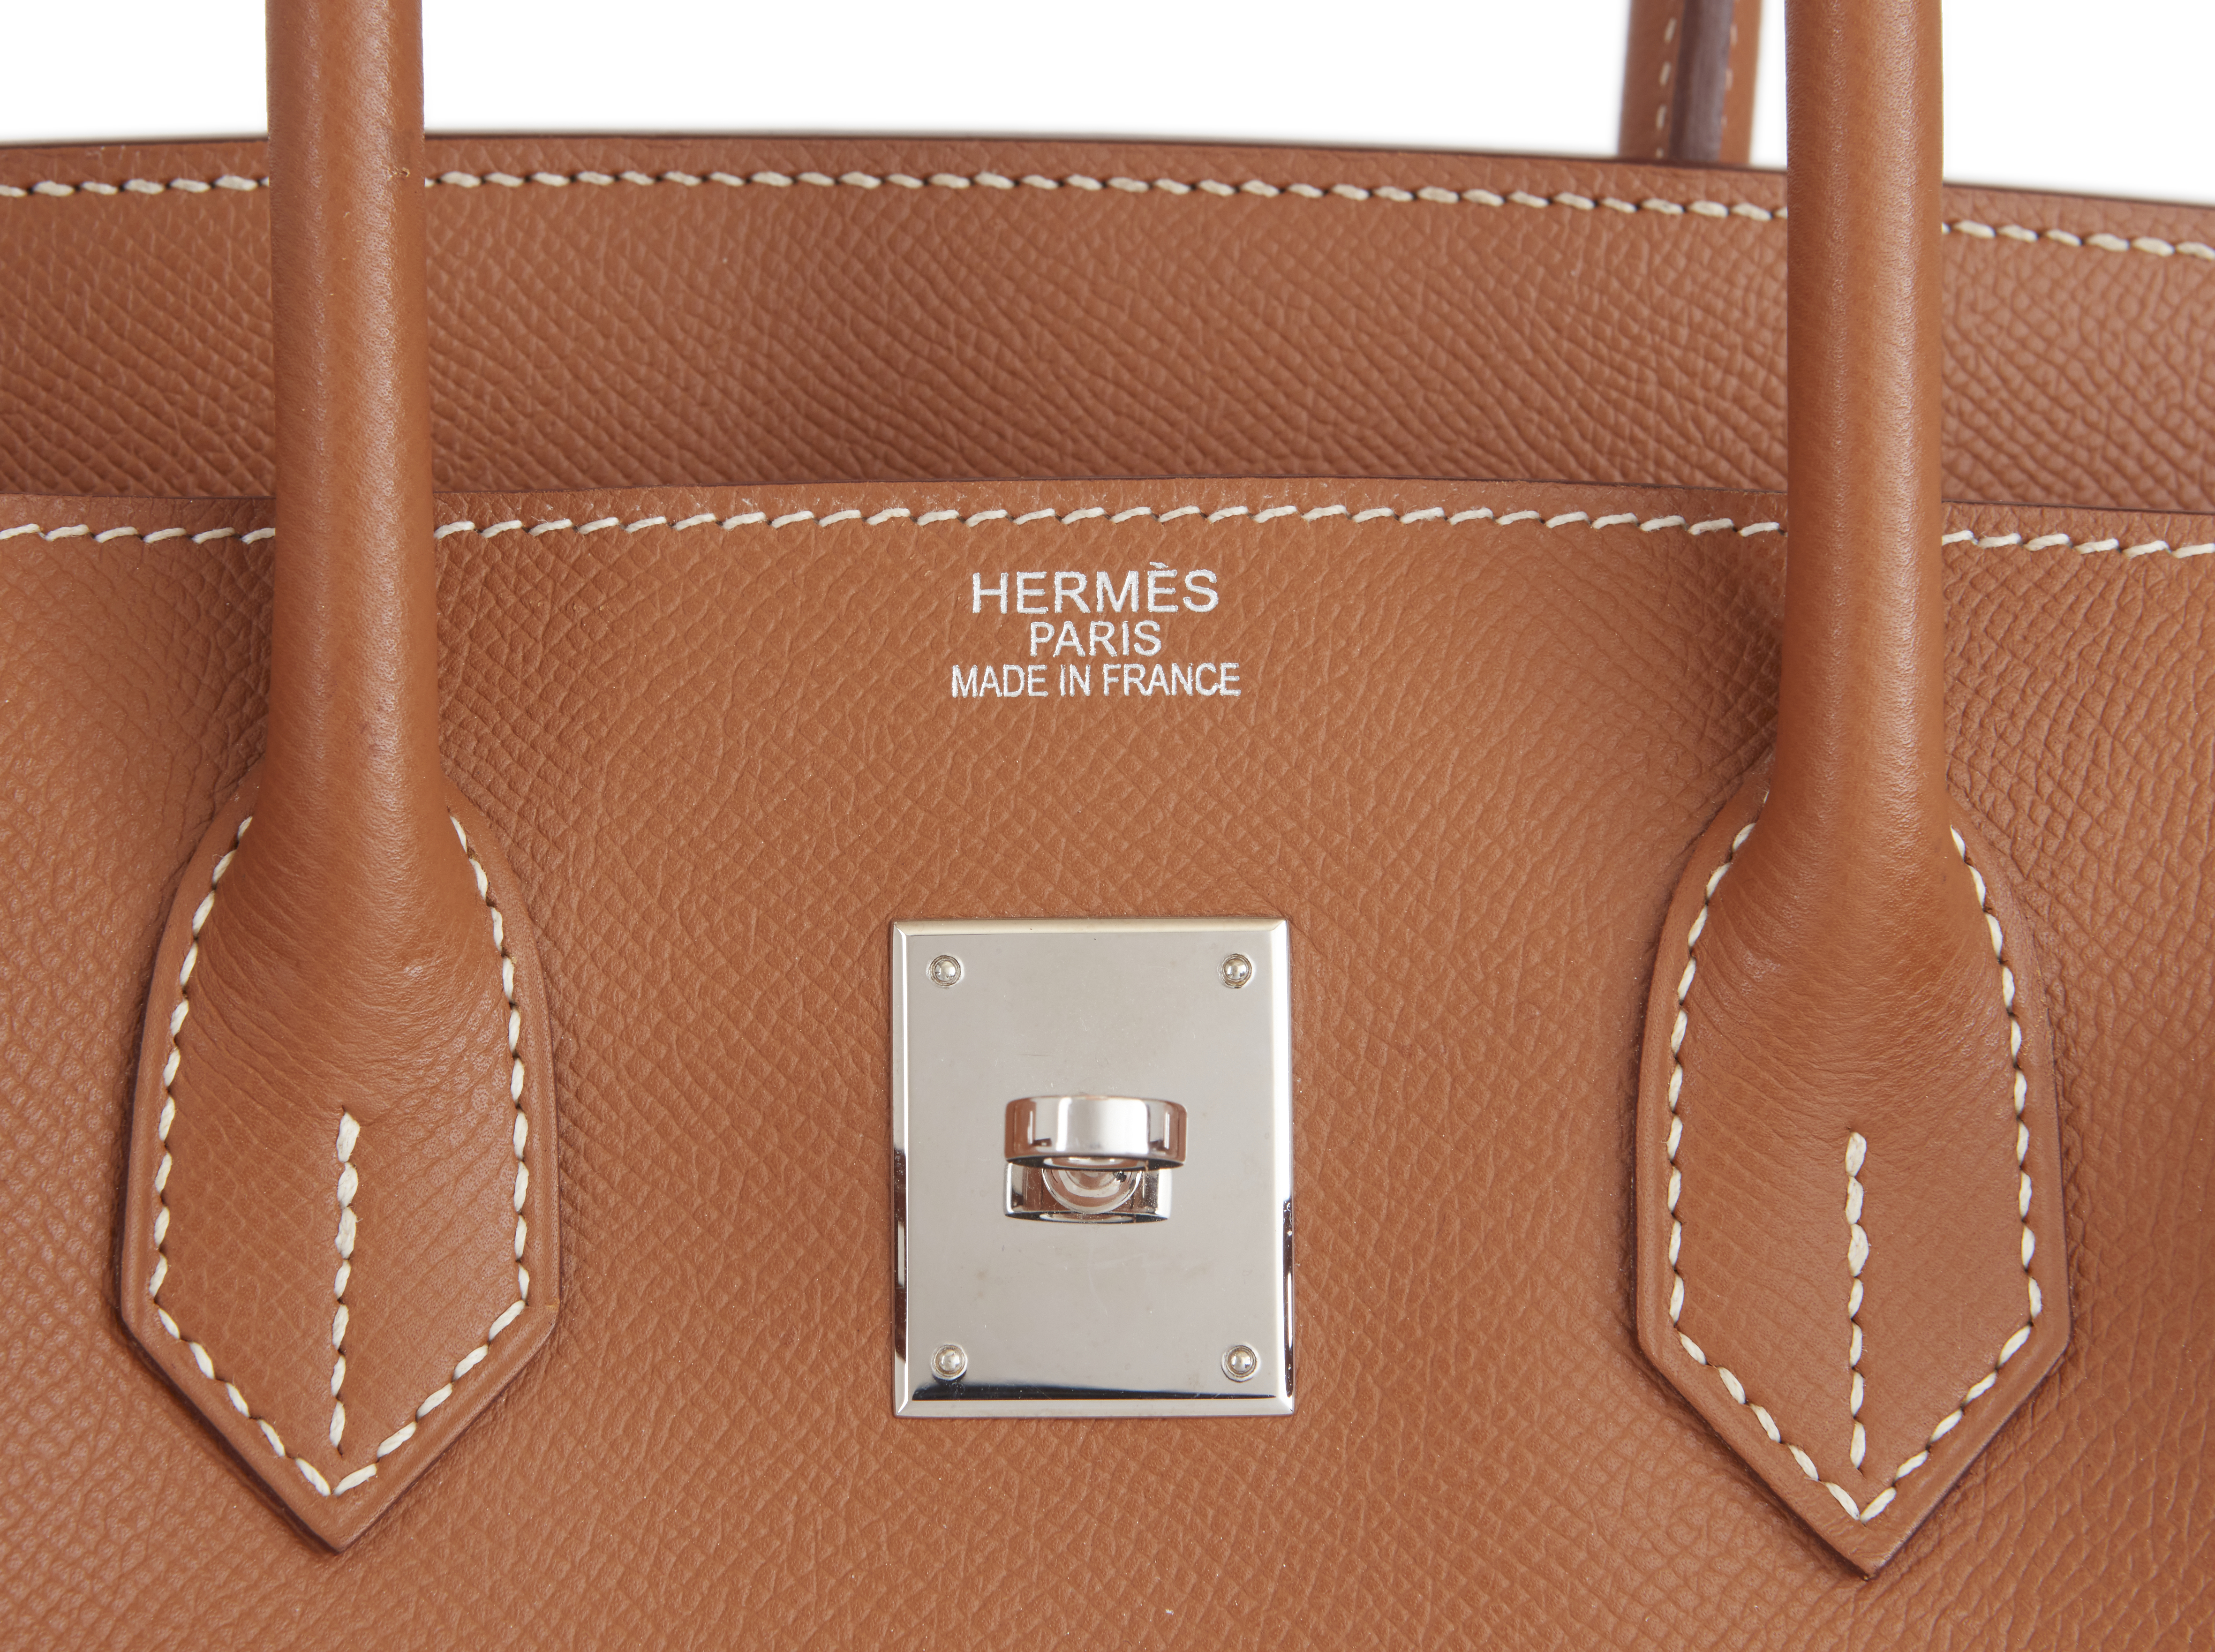 Hermès Gold Epsom leather Birkin 35 handbag, 2008 Palladium hardware The interior with one zip p... - Image 3 of 3